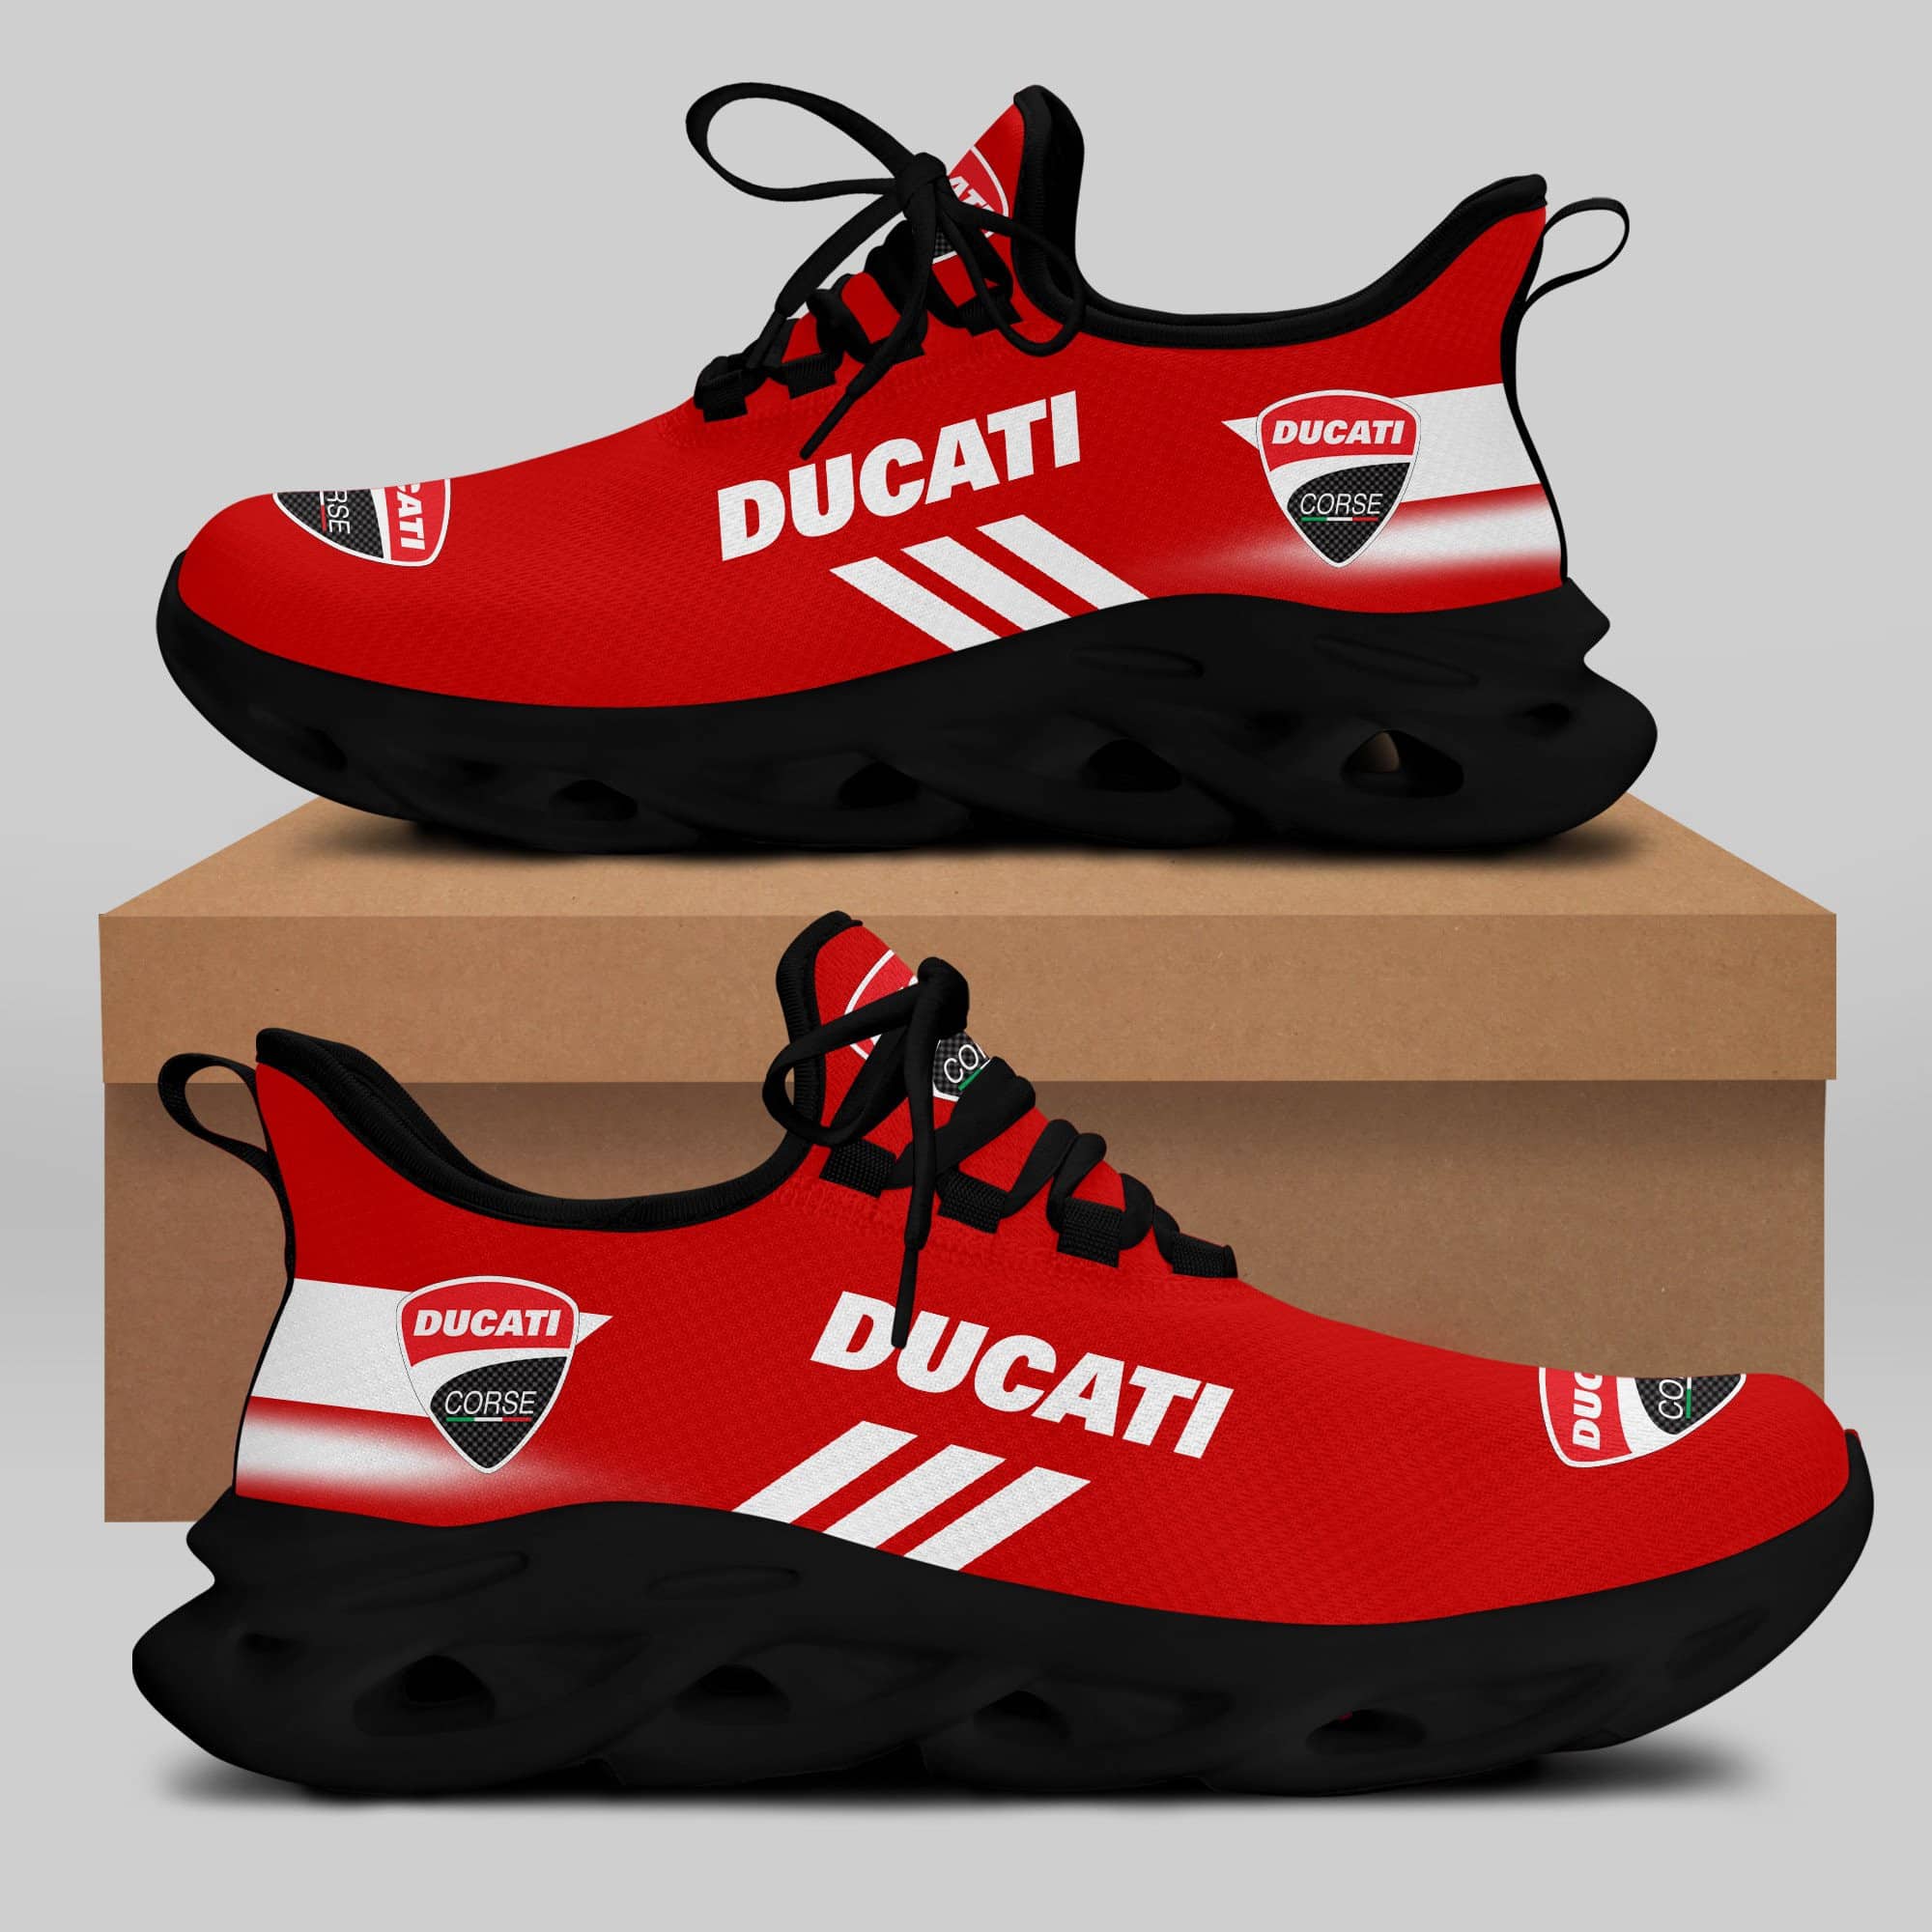 Ducati Racing Running Shoes Max Soul Shoes Sneakers Ver 33 2